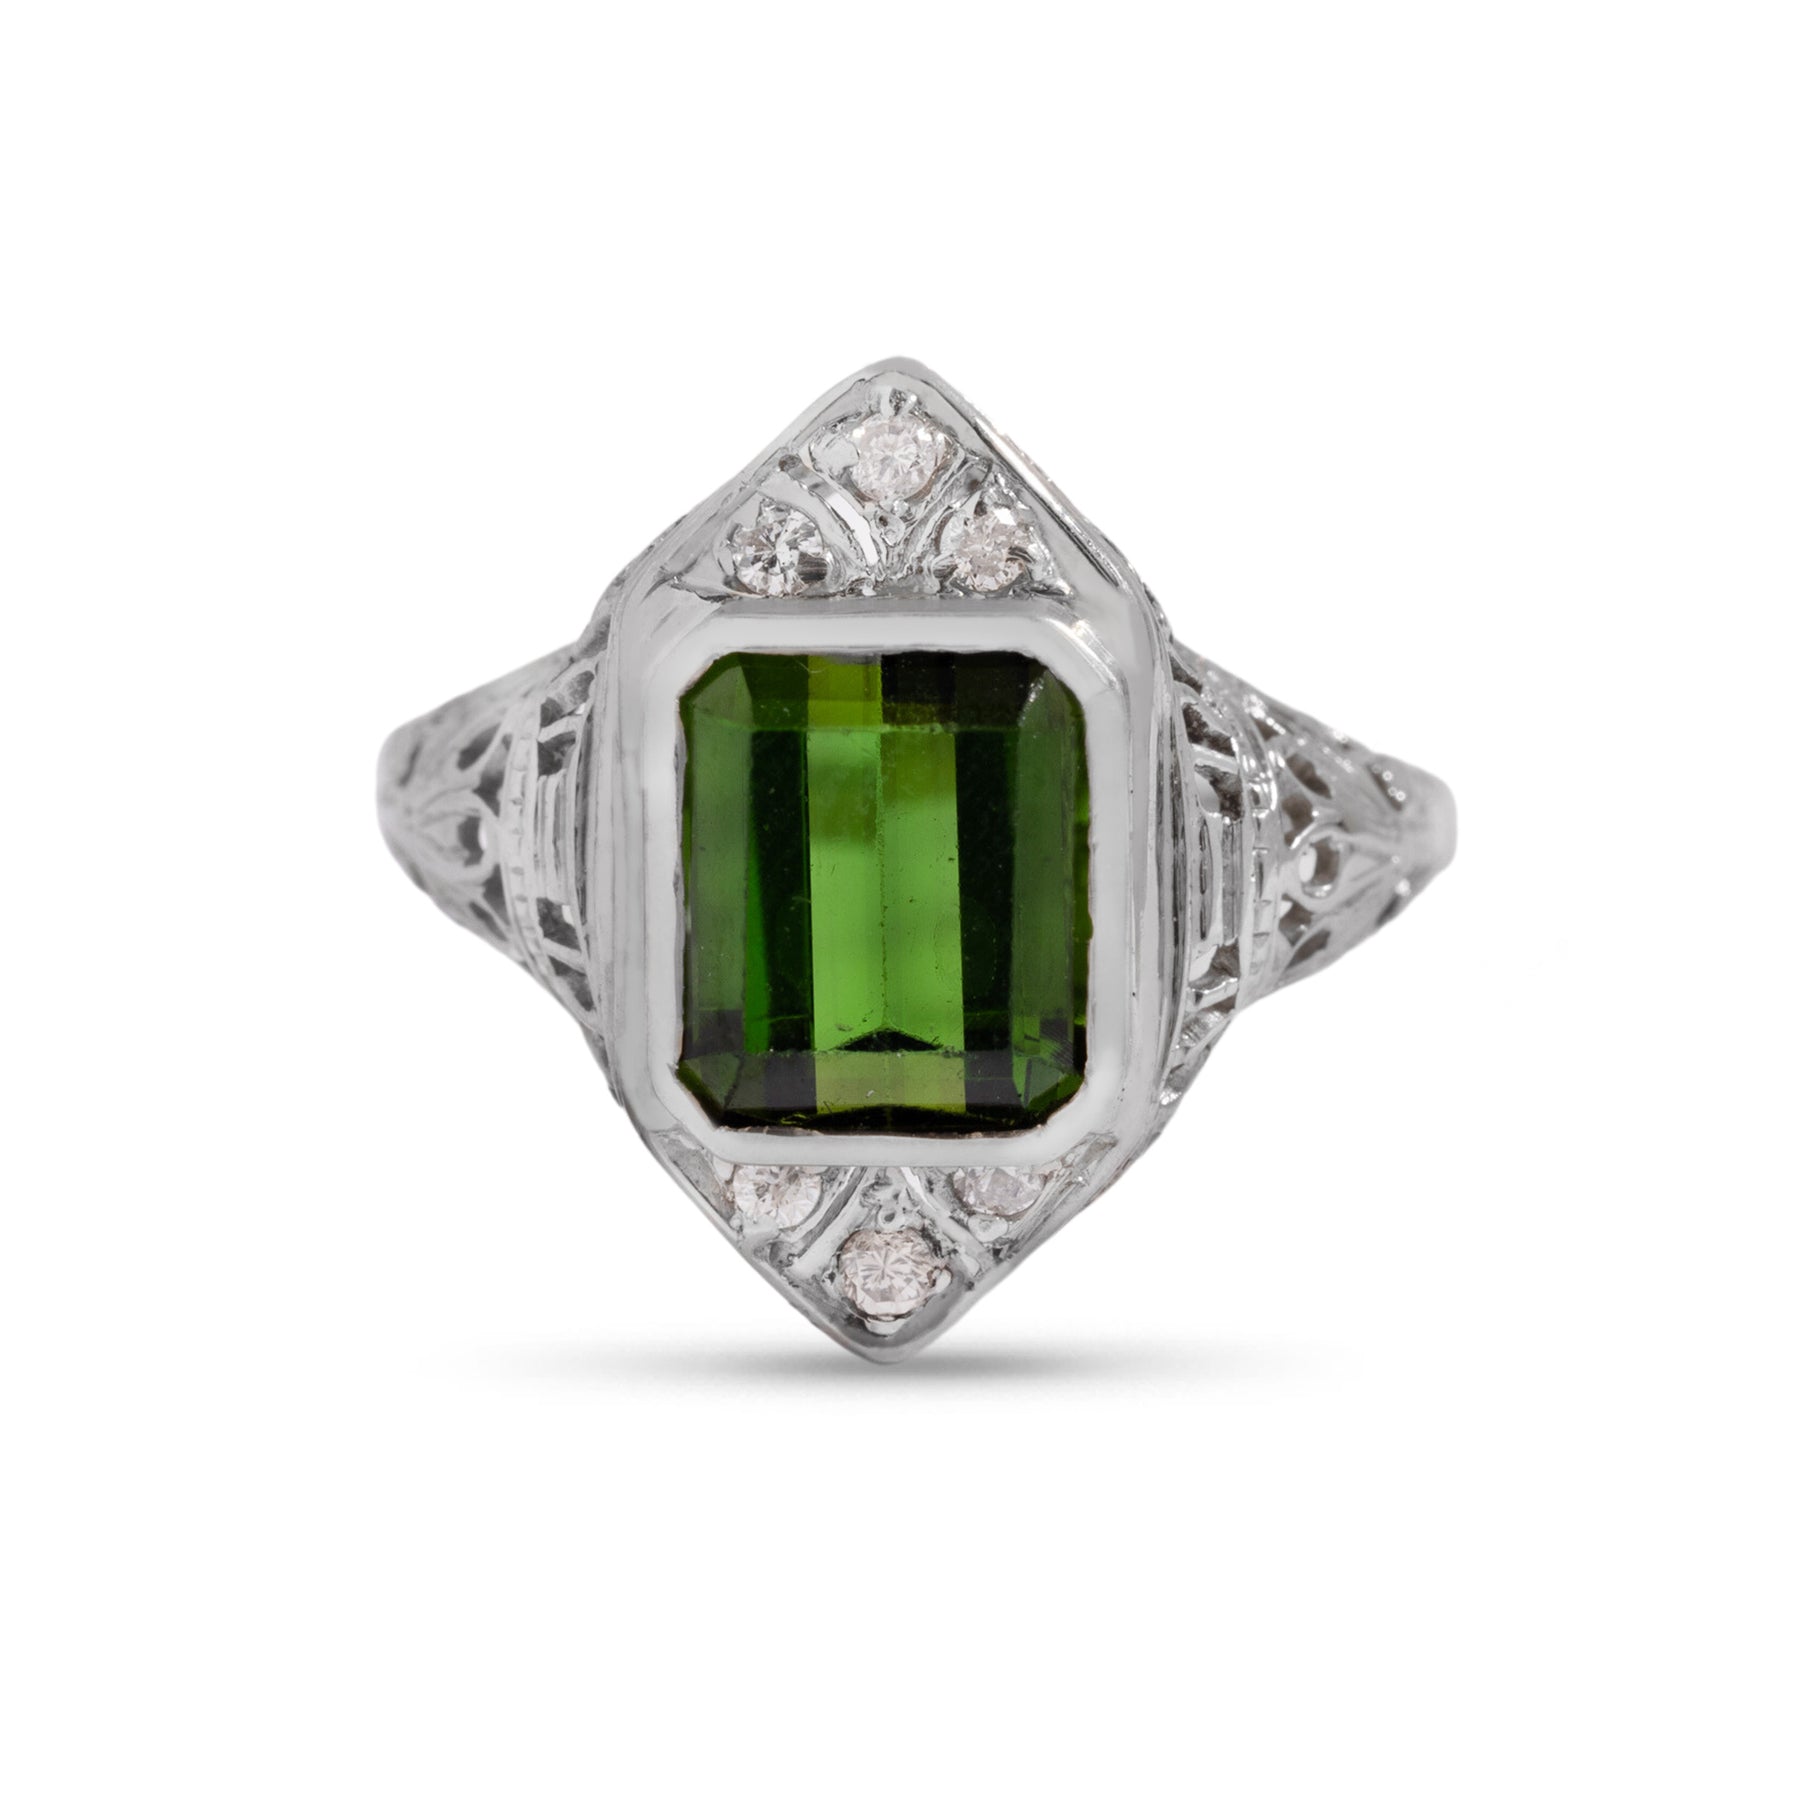 14k white gold estate ~2.6ct emerald cut tourmaline filigree ring with diamond details size 5.75